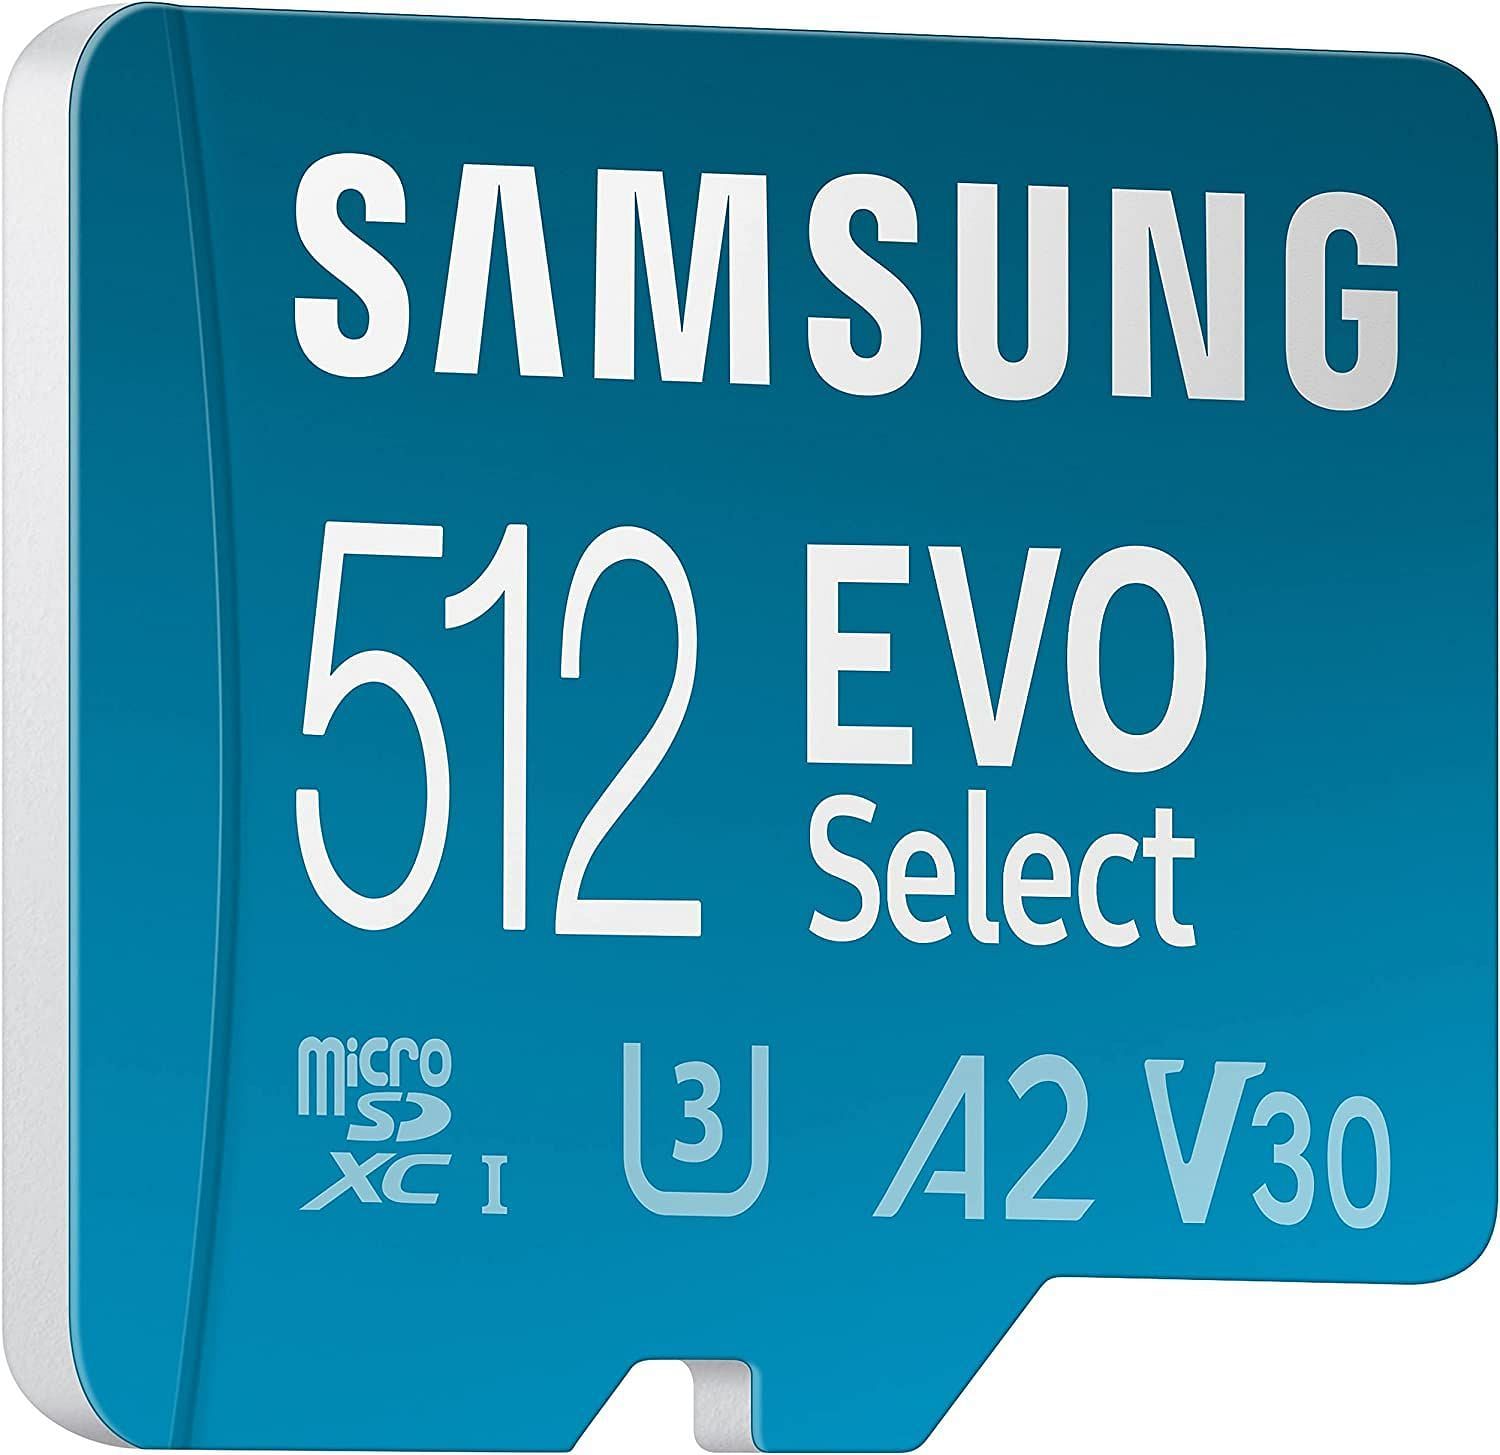 The Samsung EVO 512 GB microSDXC memory card with adapter (Image via Amazon)